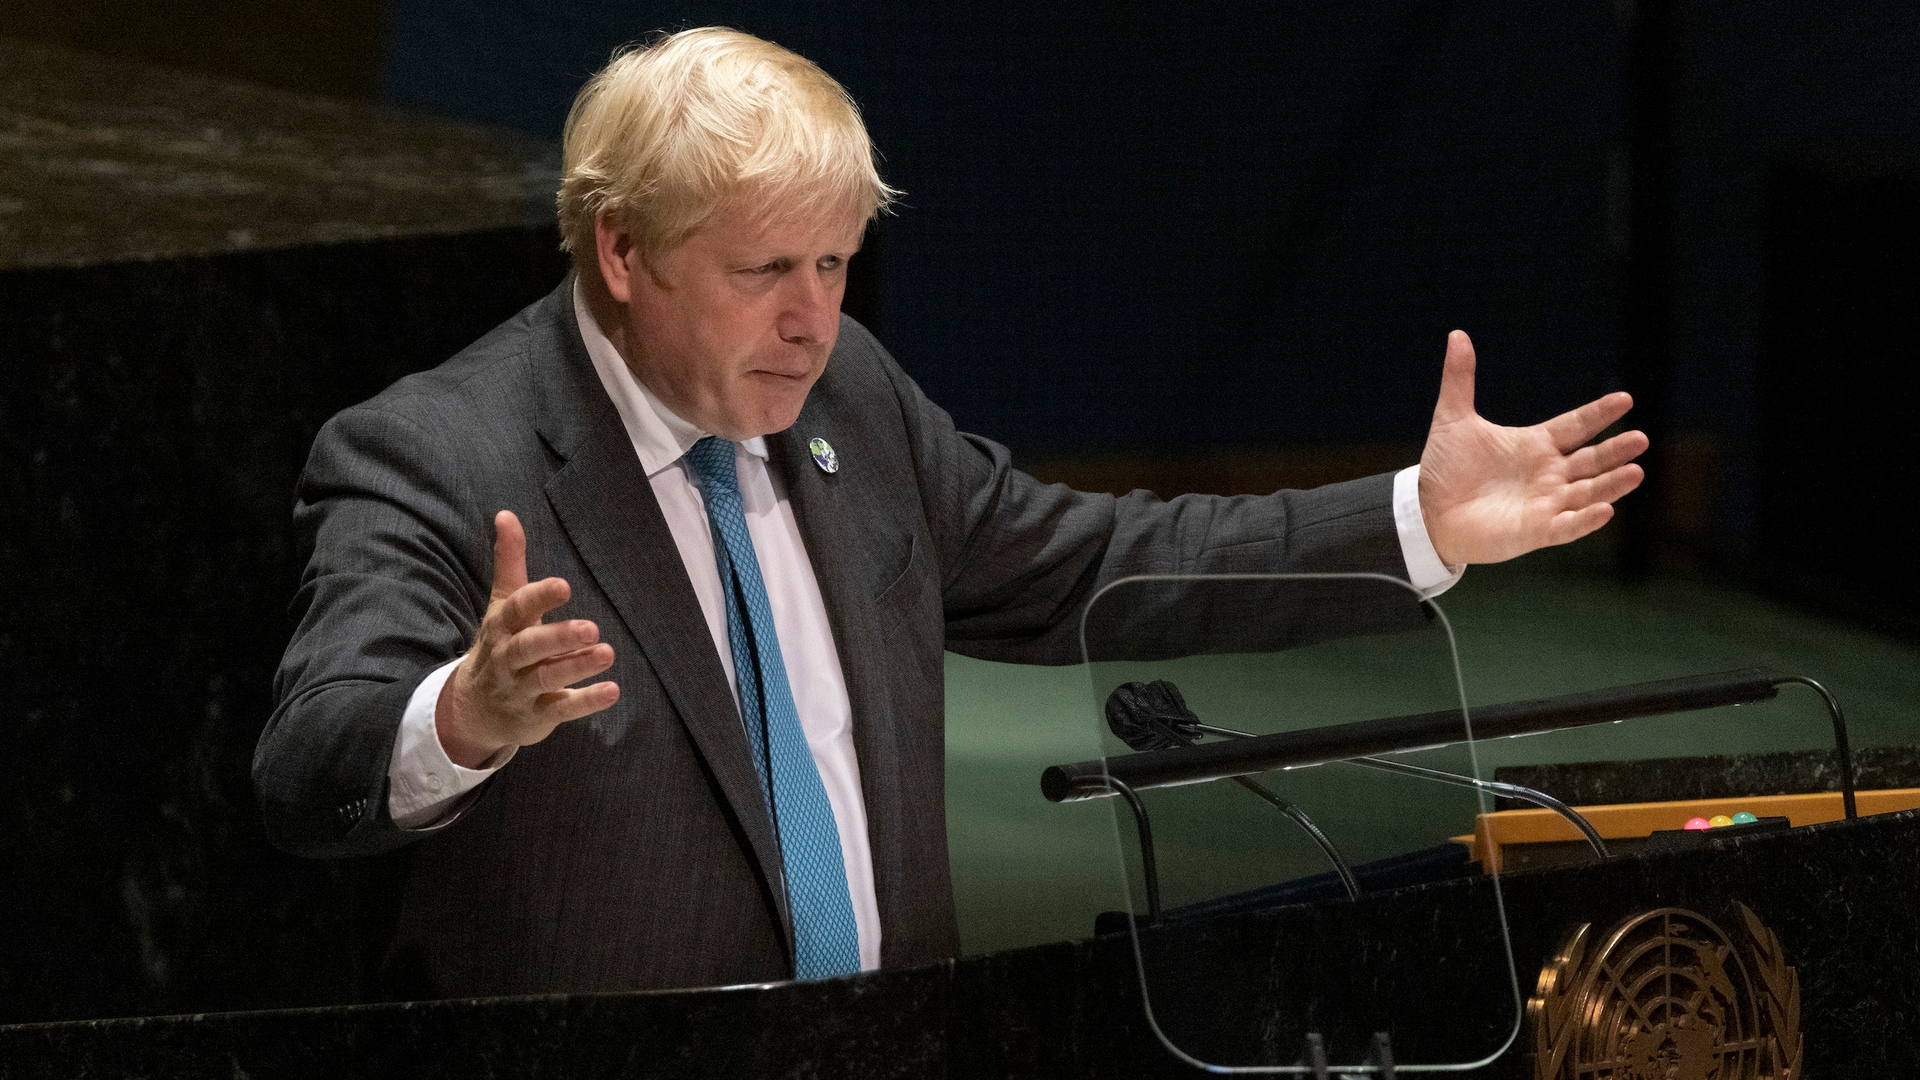 Prime Minister Boris Johnson UNGR speech